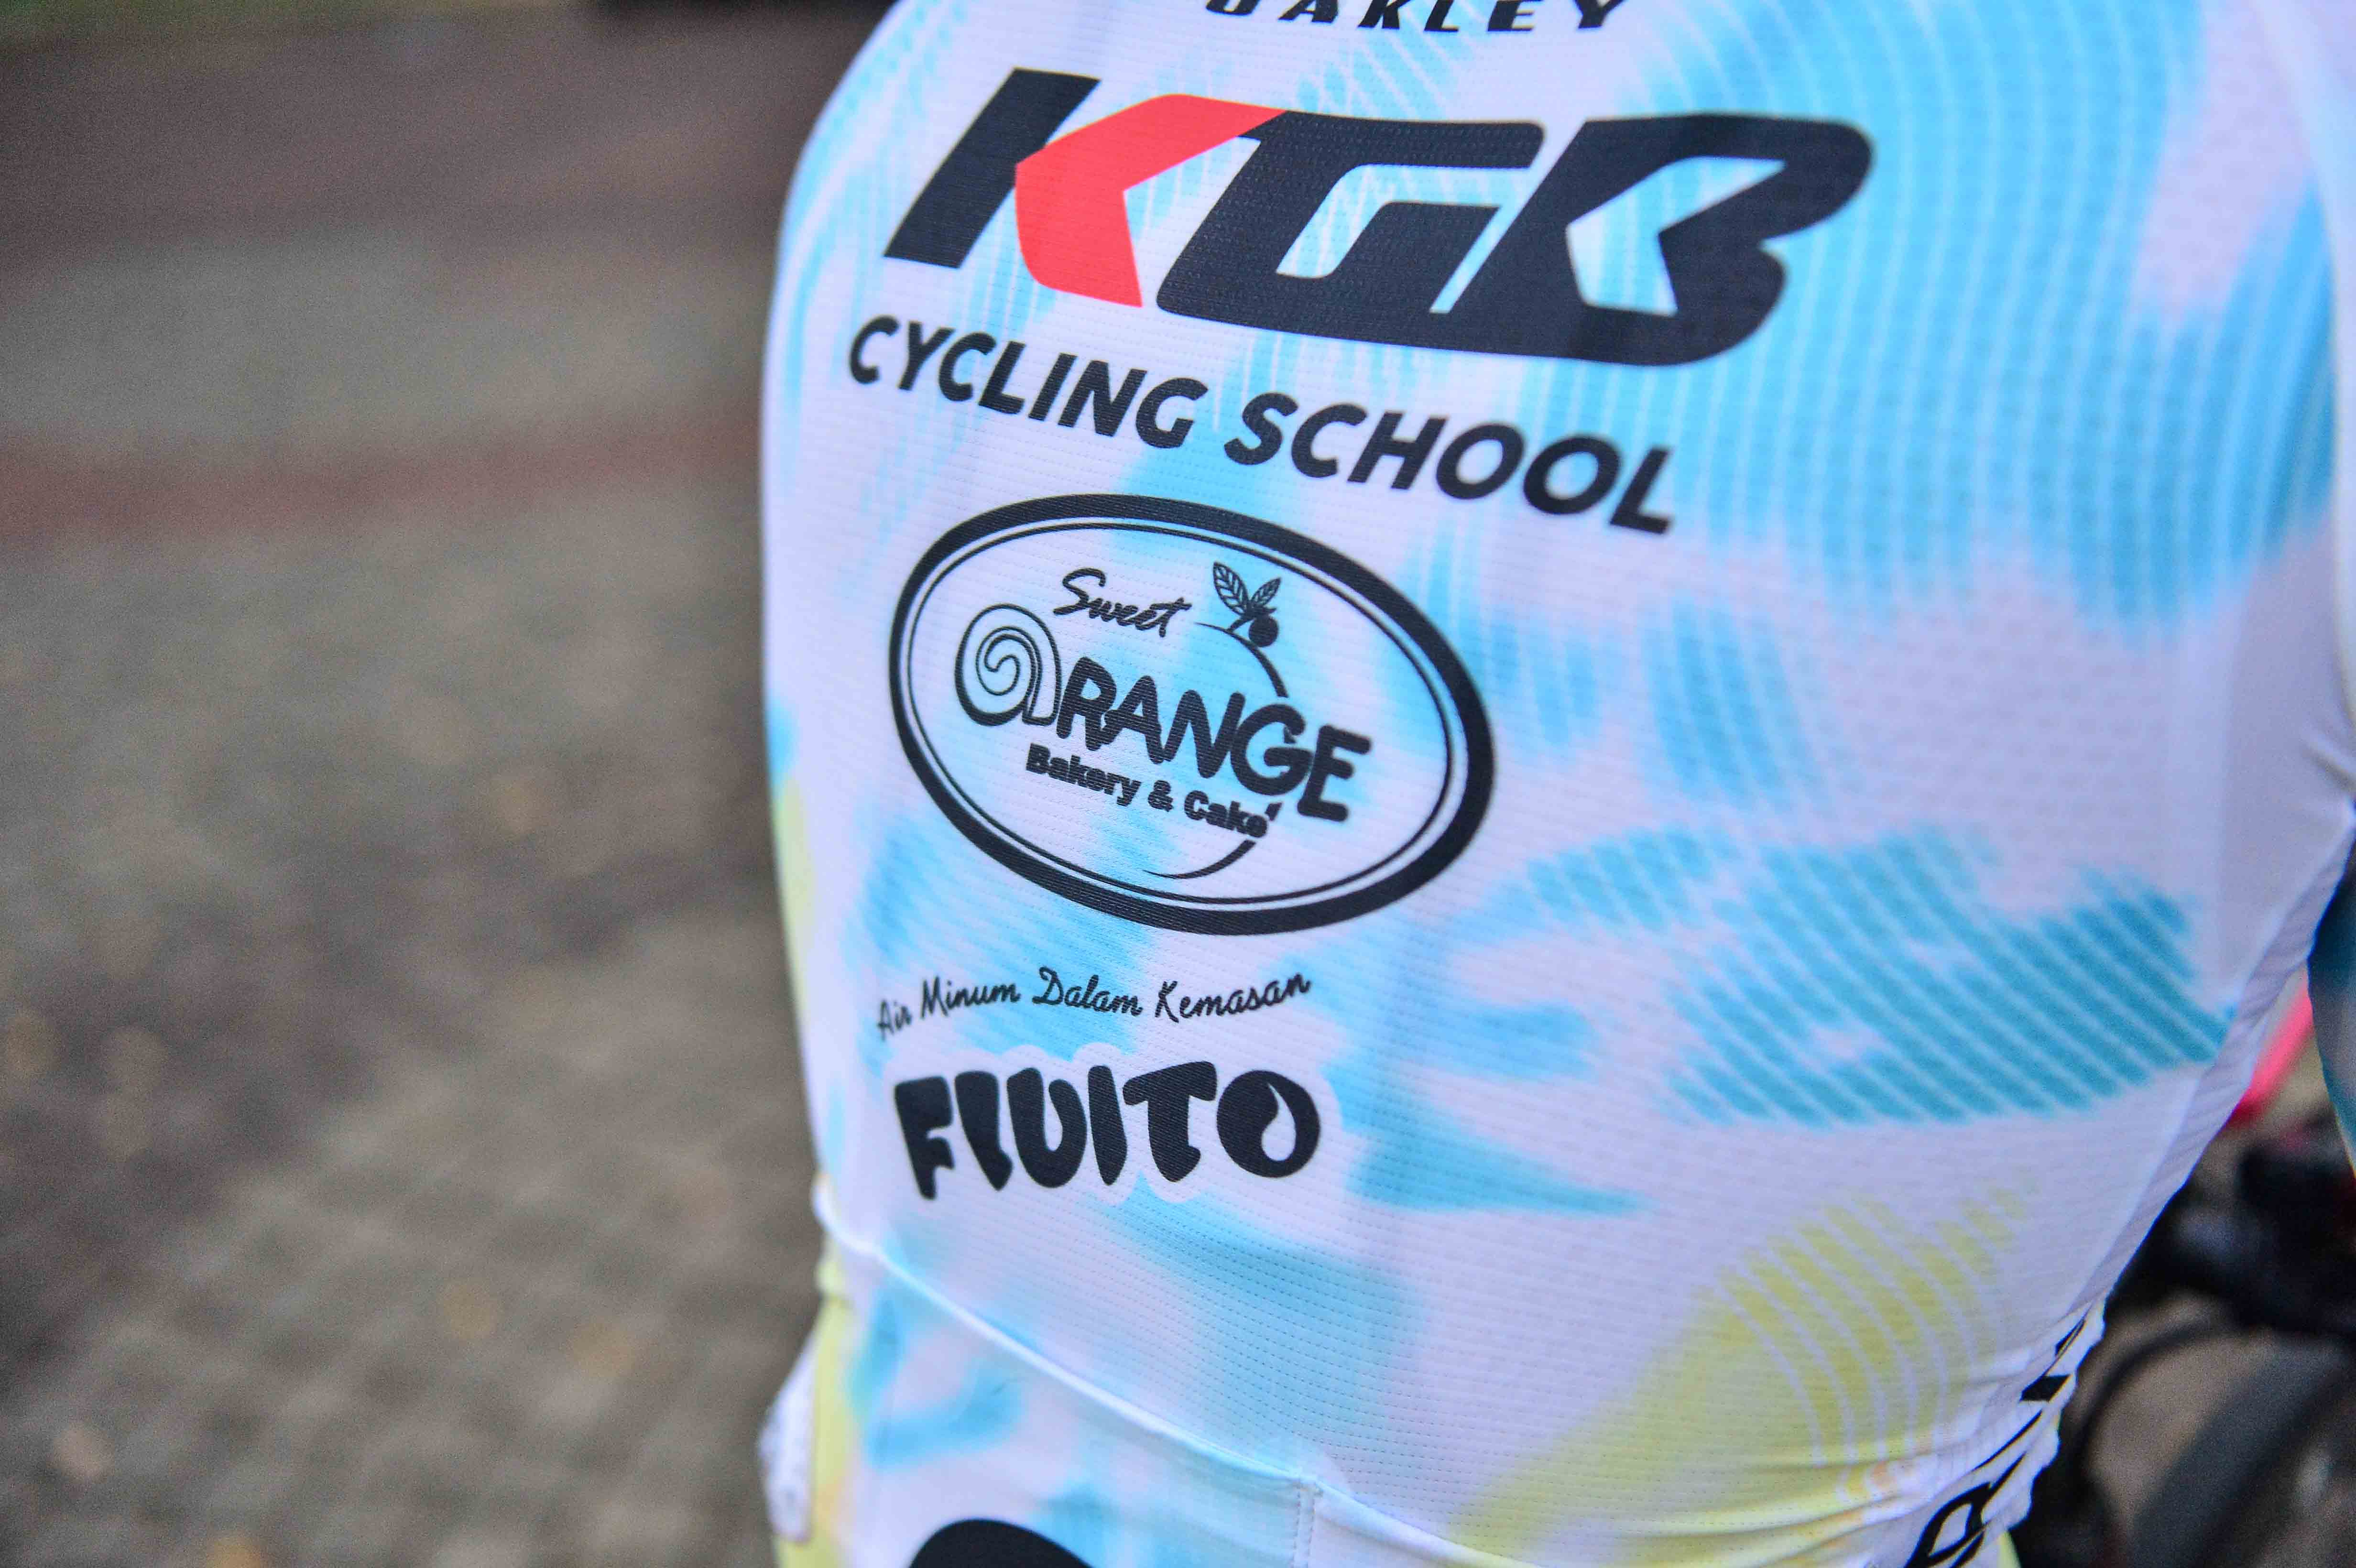 KGB Cycling School: Launching Jersey Aurora Sekaligus Umumkan Kelulusan Member